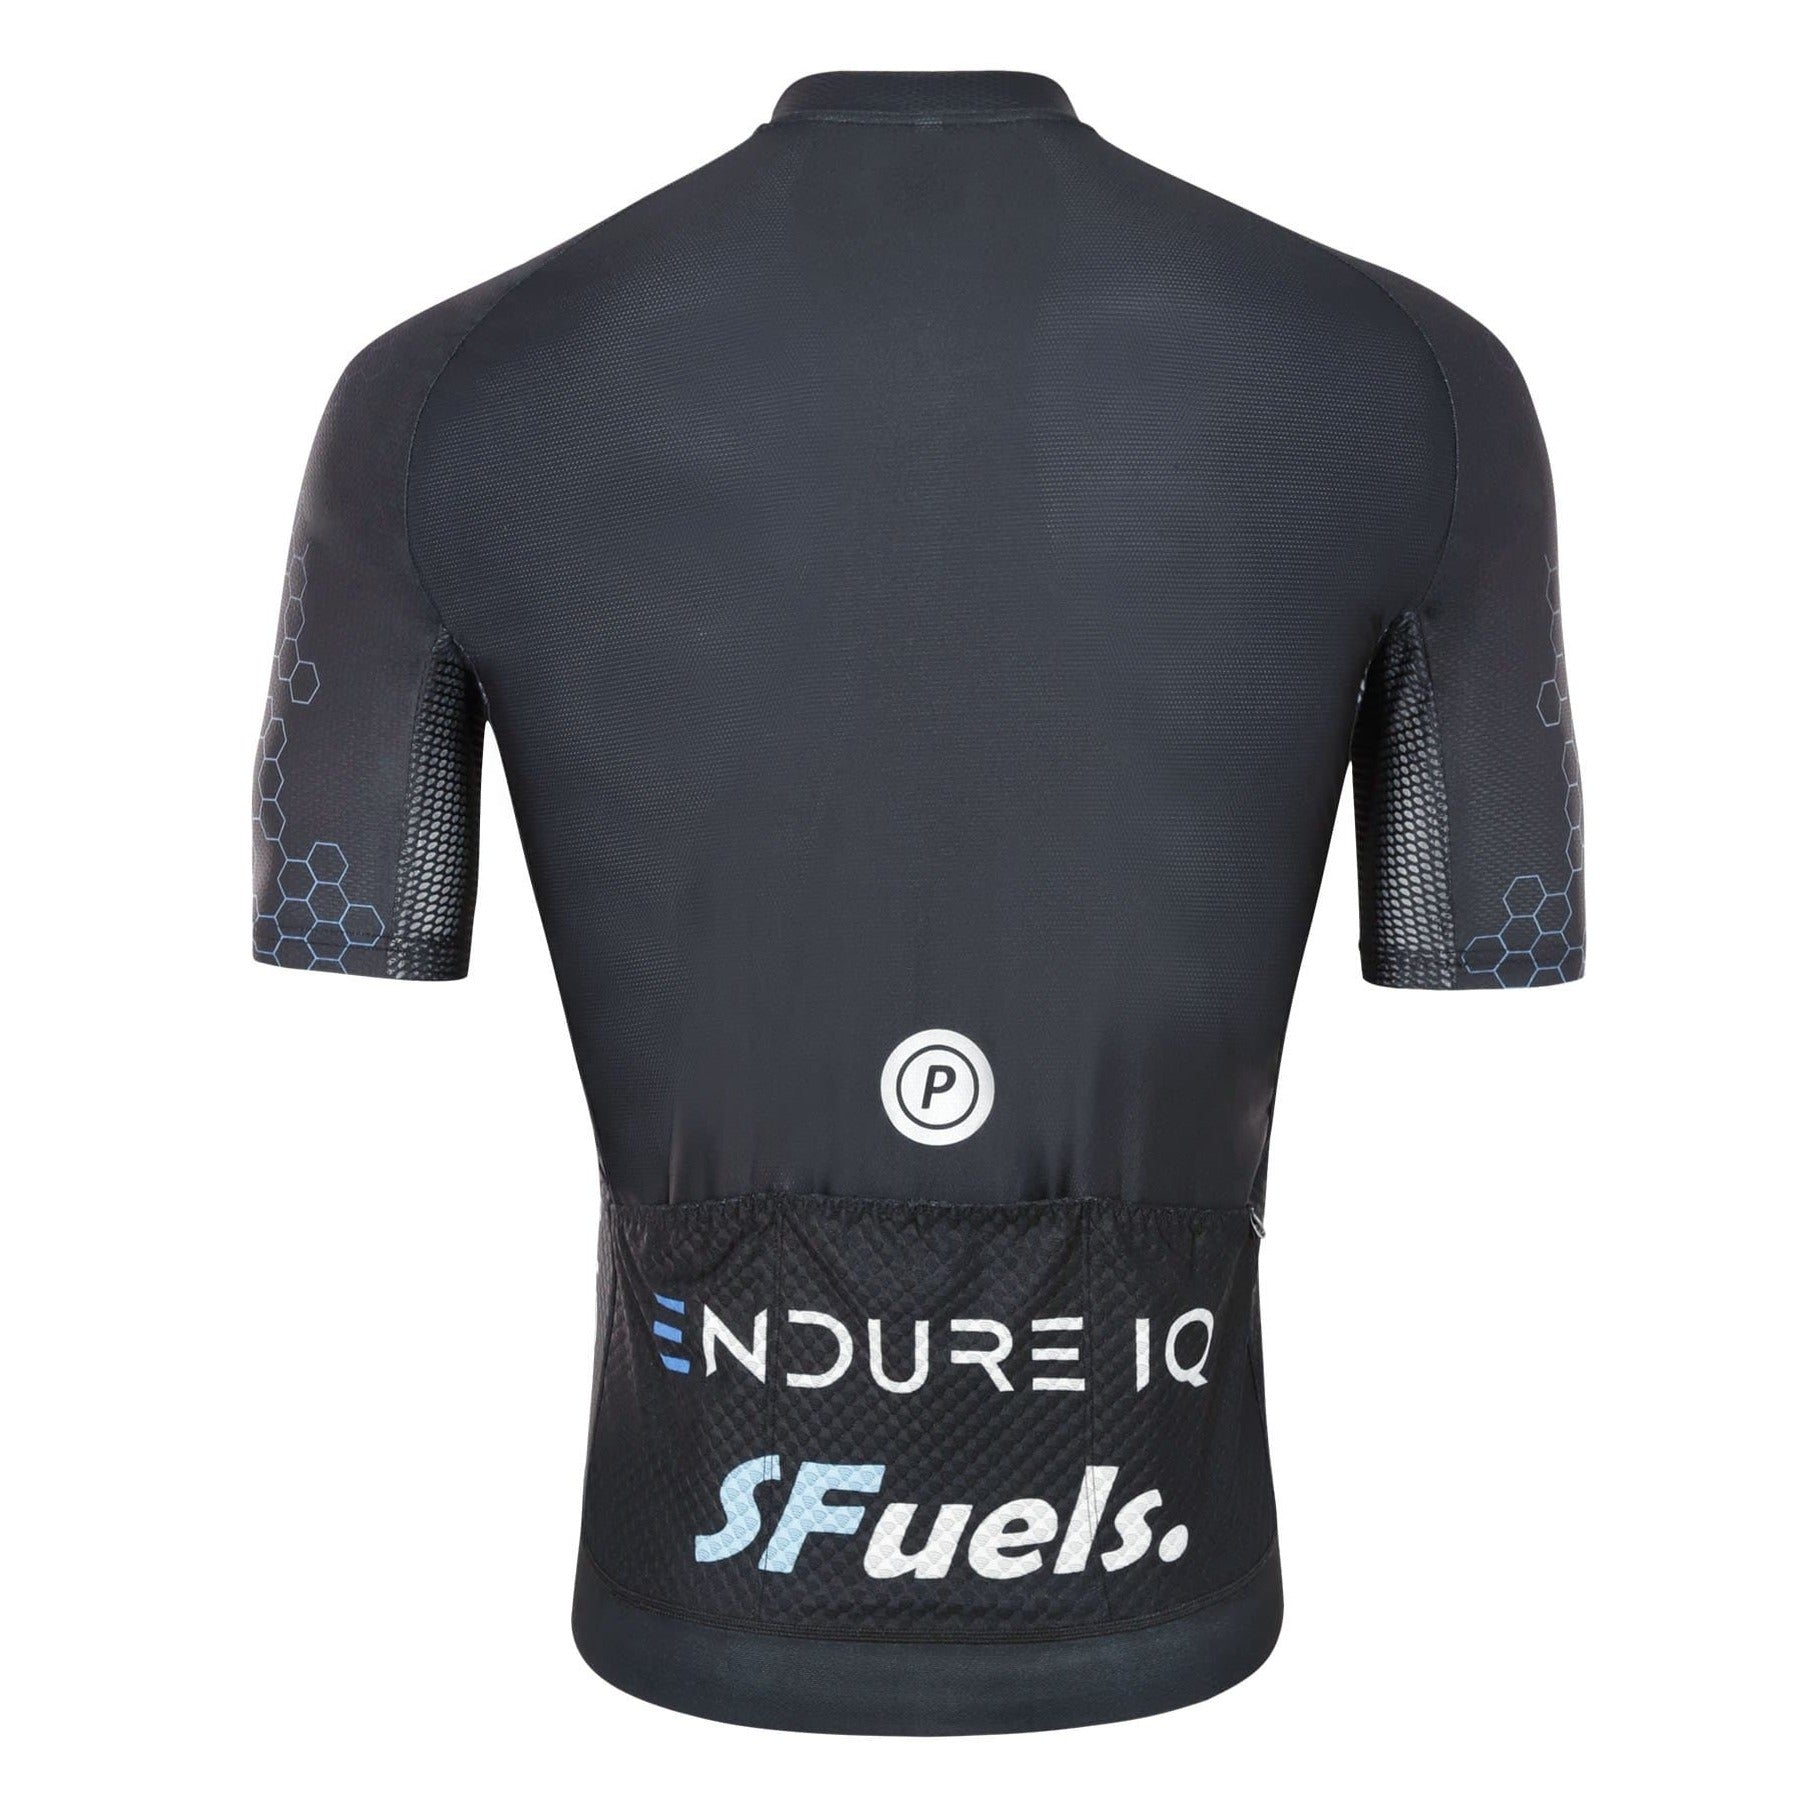 Purpose Elite Racing Cycling Jersey (Black) rear view